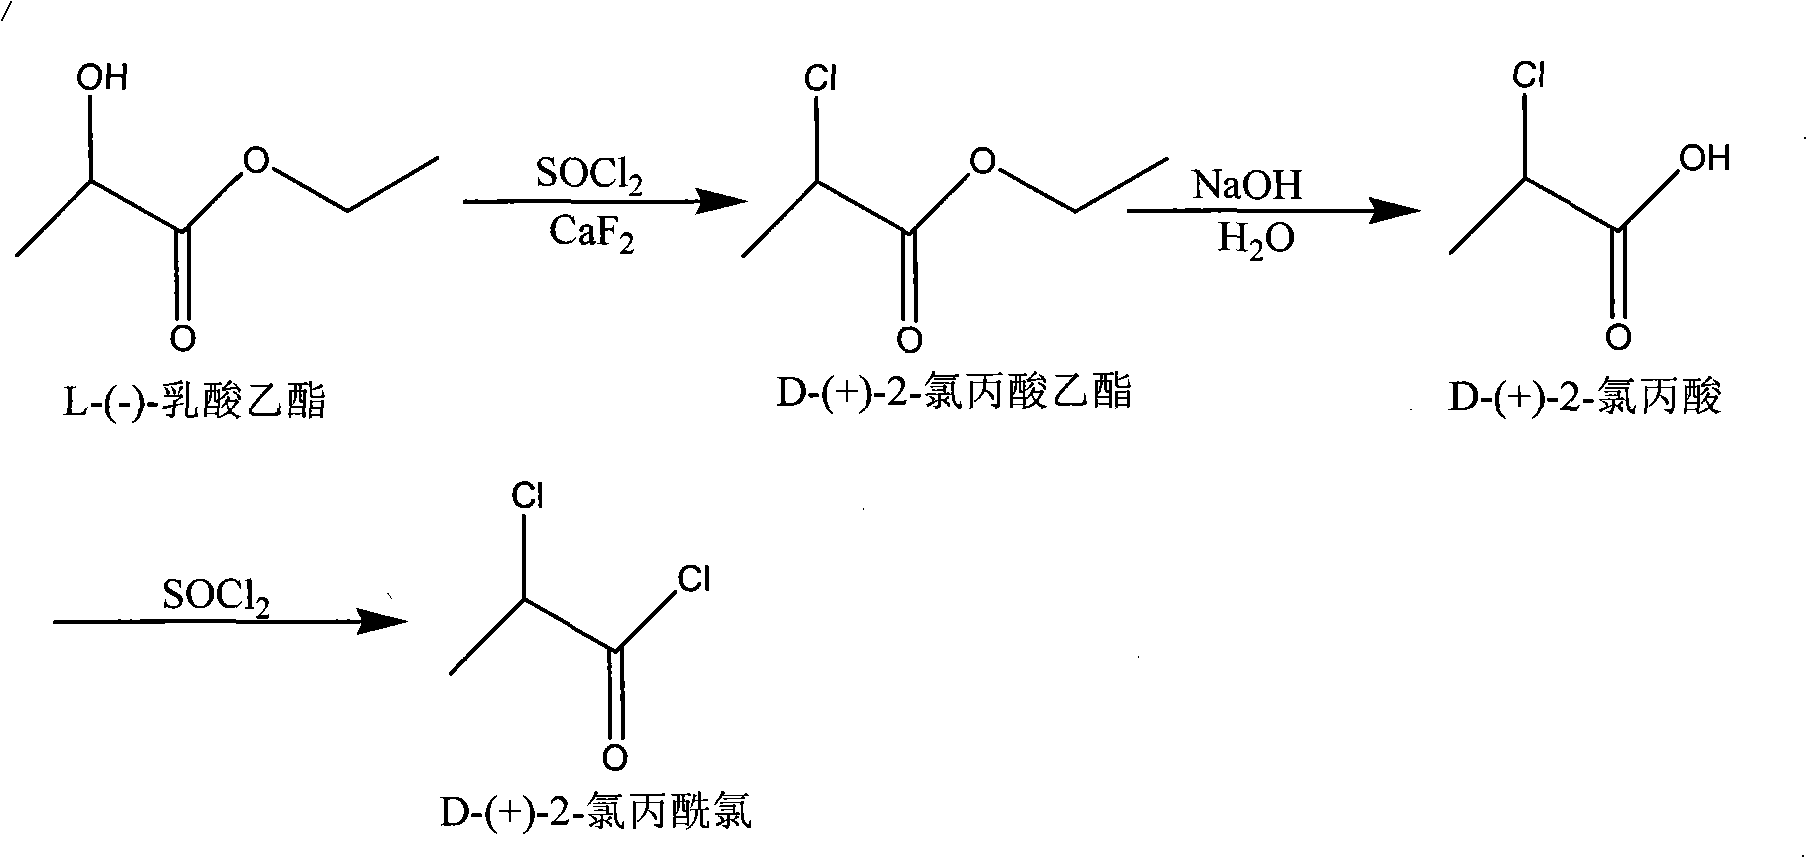 Synthetic method of D-(+)-2-chloro-propanoyl chloride